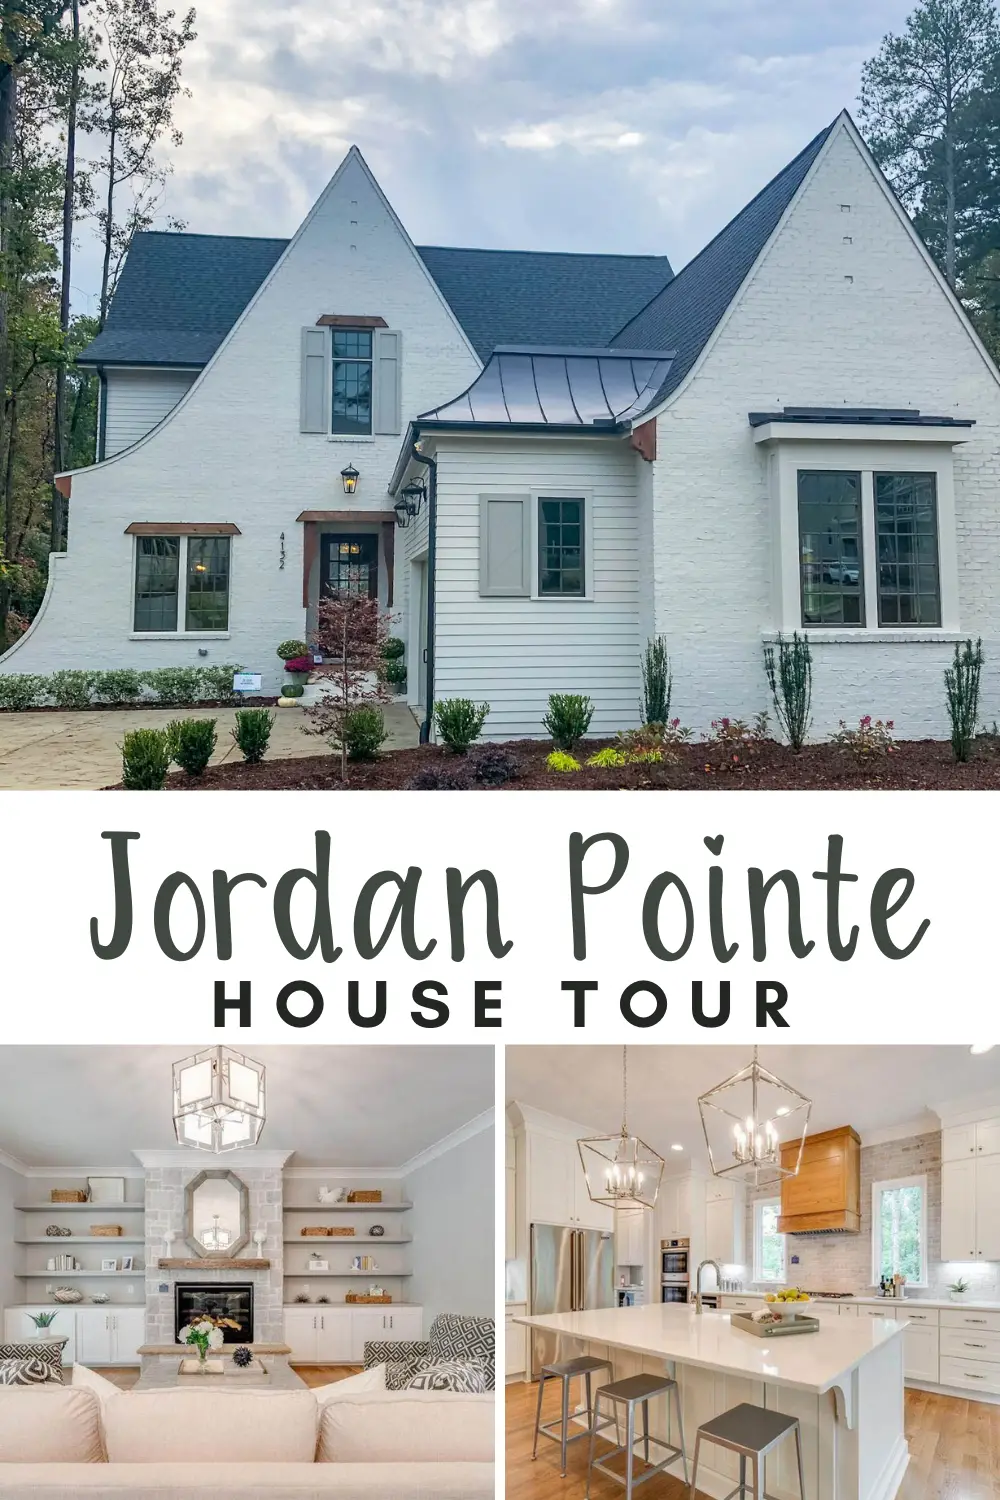 Jordan Pointe House Tour